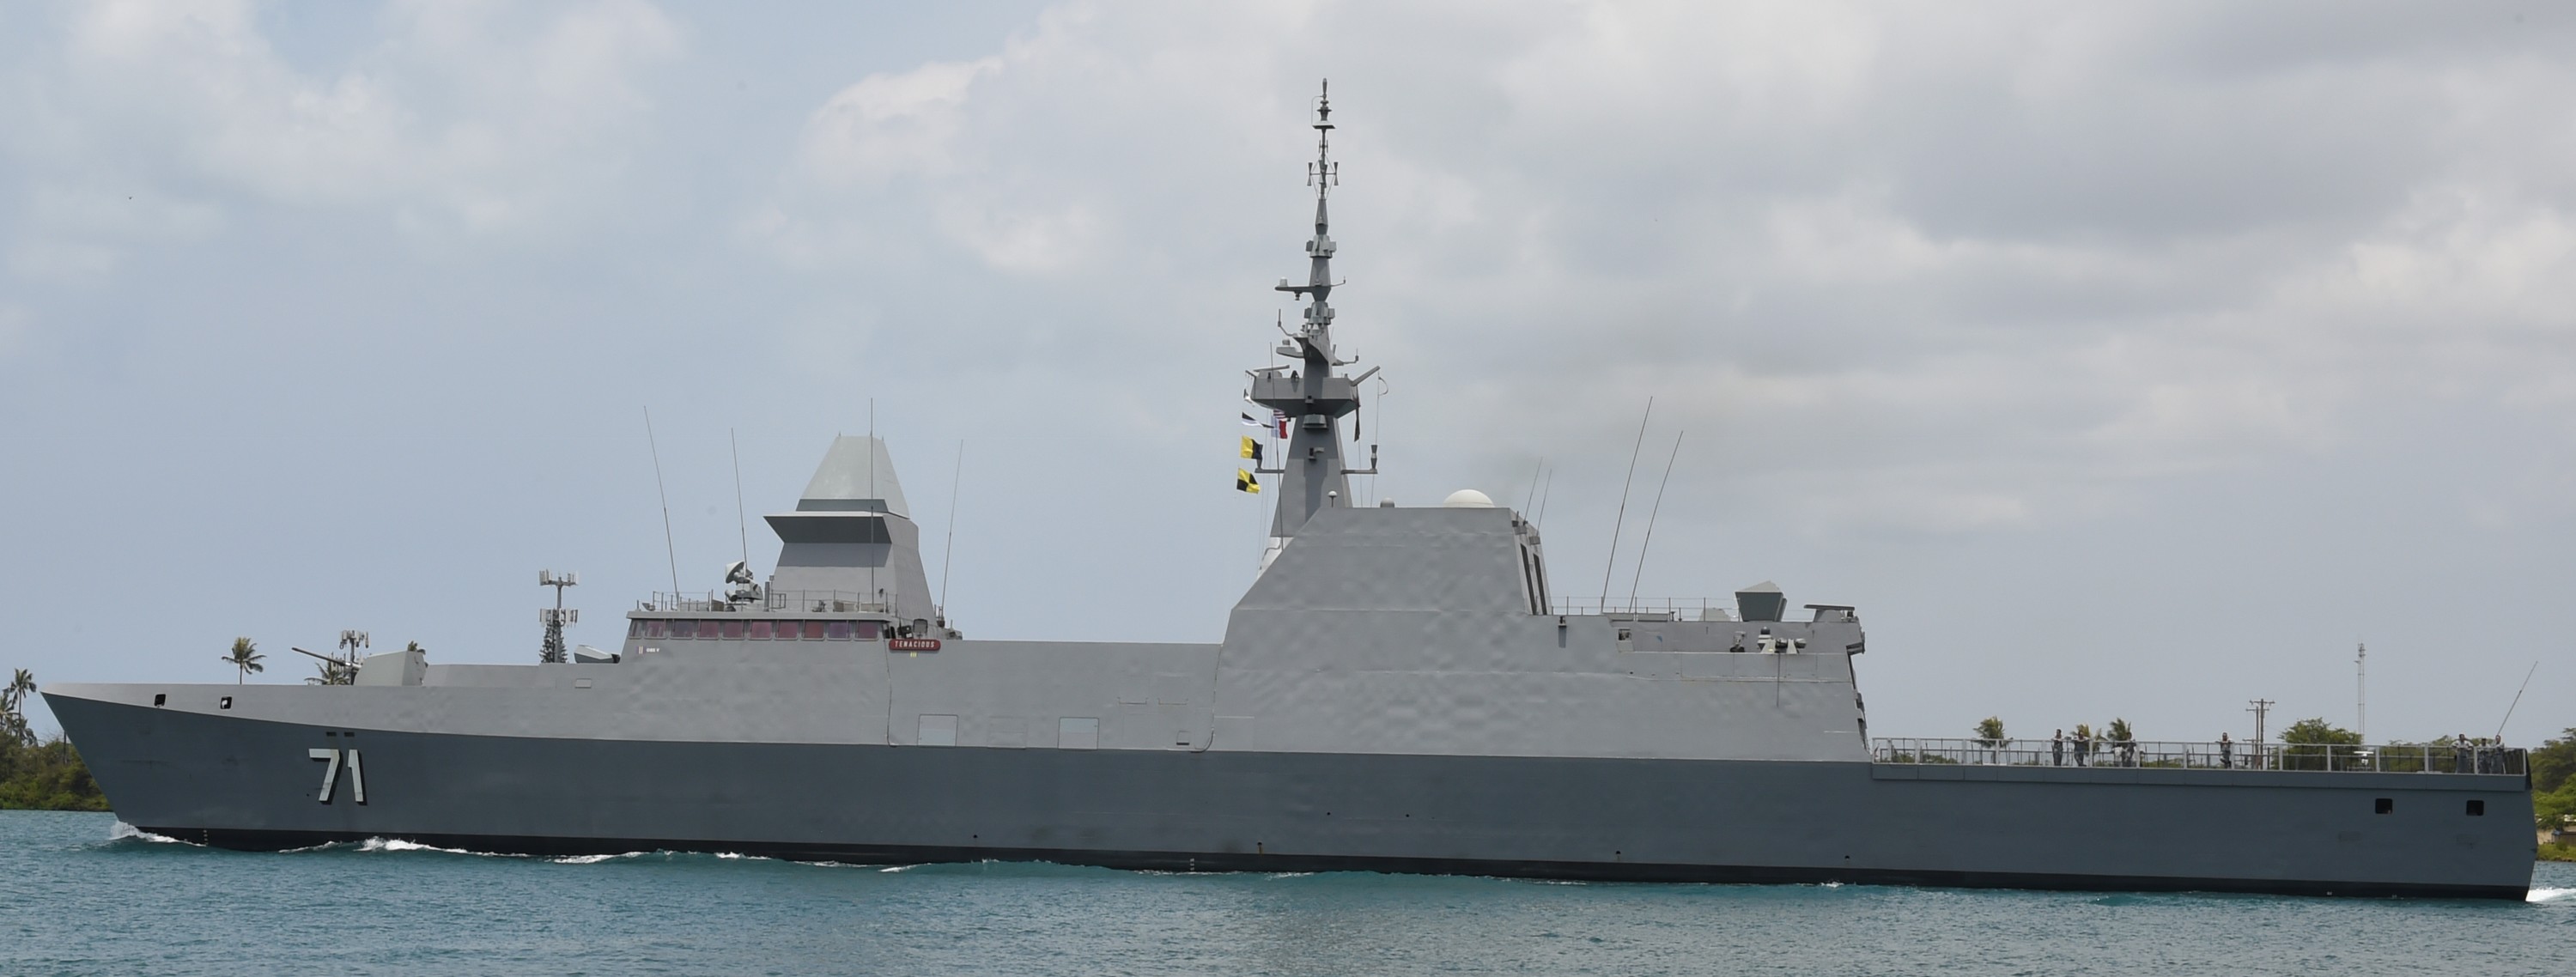 71 rss tenacious formidable class multi-mission missile frigate ffg republic singapore navy exercise rimpac hawaii 05